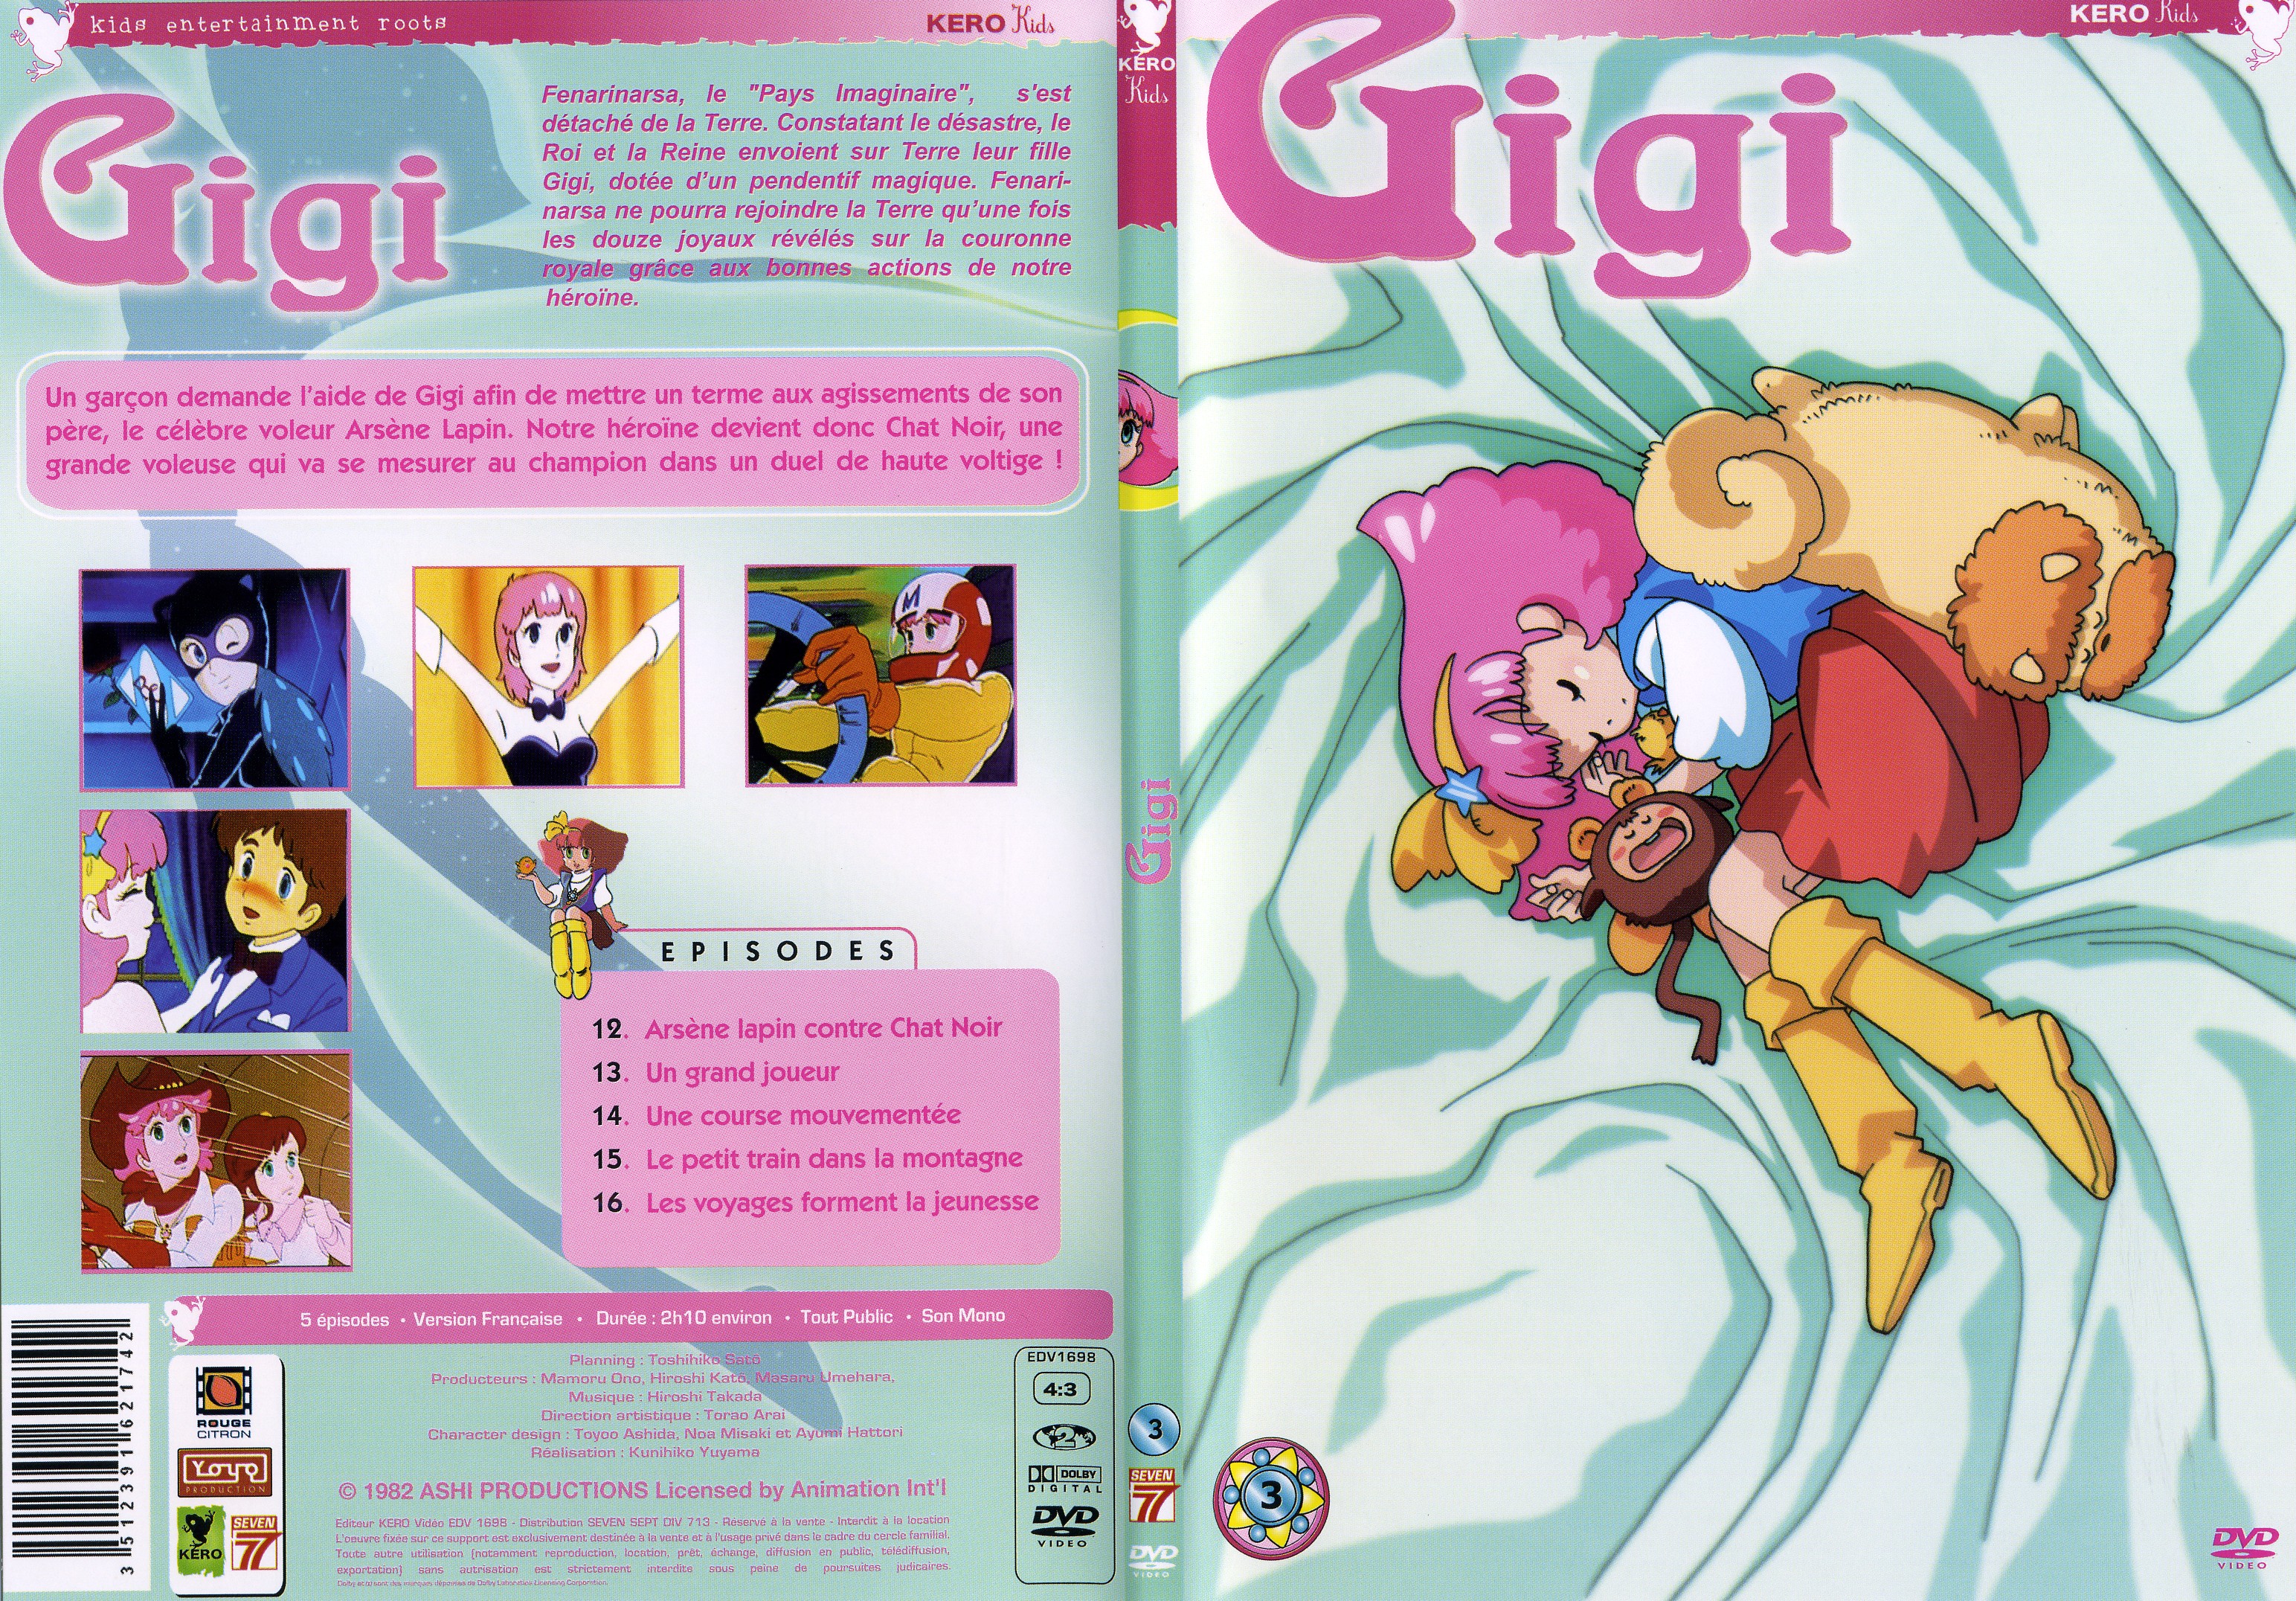 Jaquette DVD Gigi vol 3